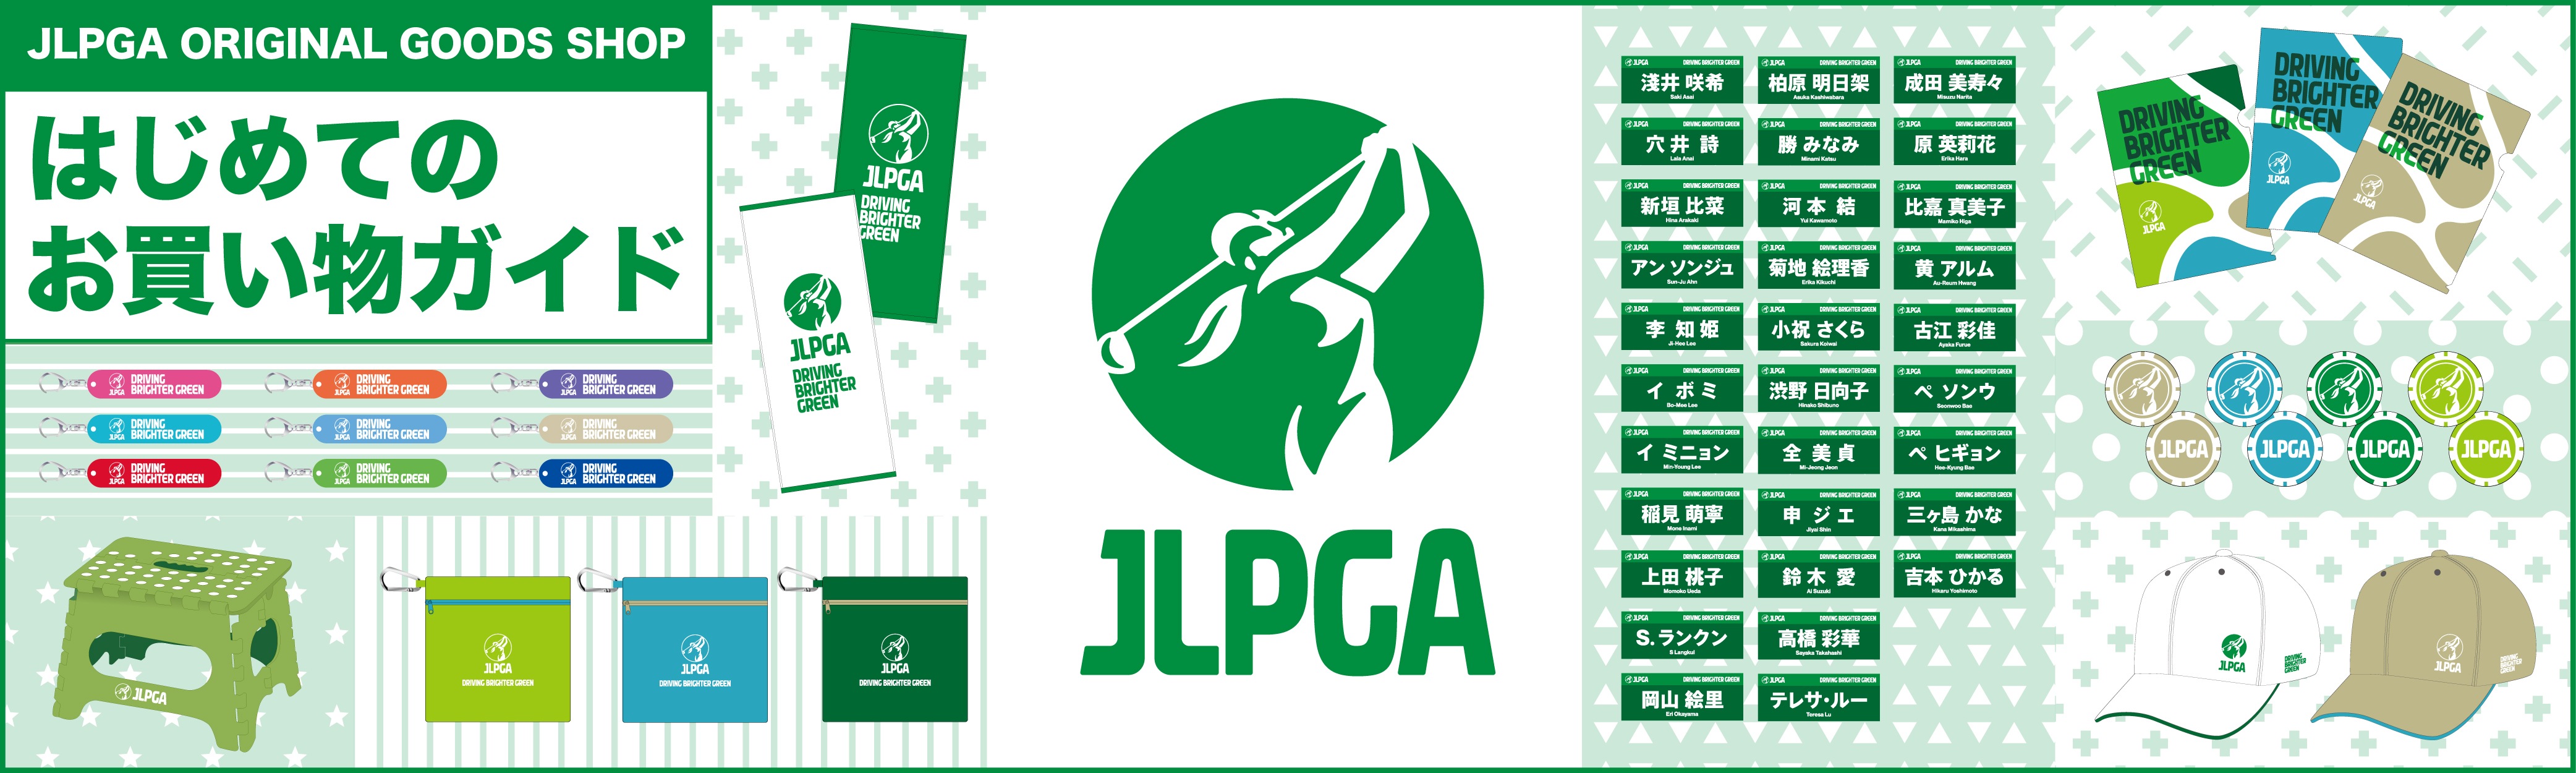 JLPGA ORIGINAL GOODS SHOP（一般社団法人日本女子プロゴルフ協会）